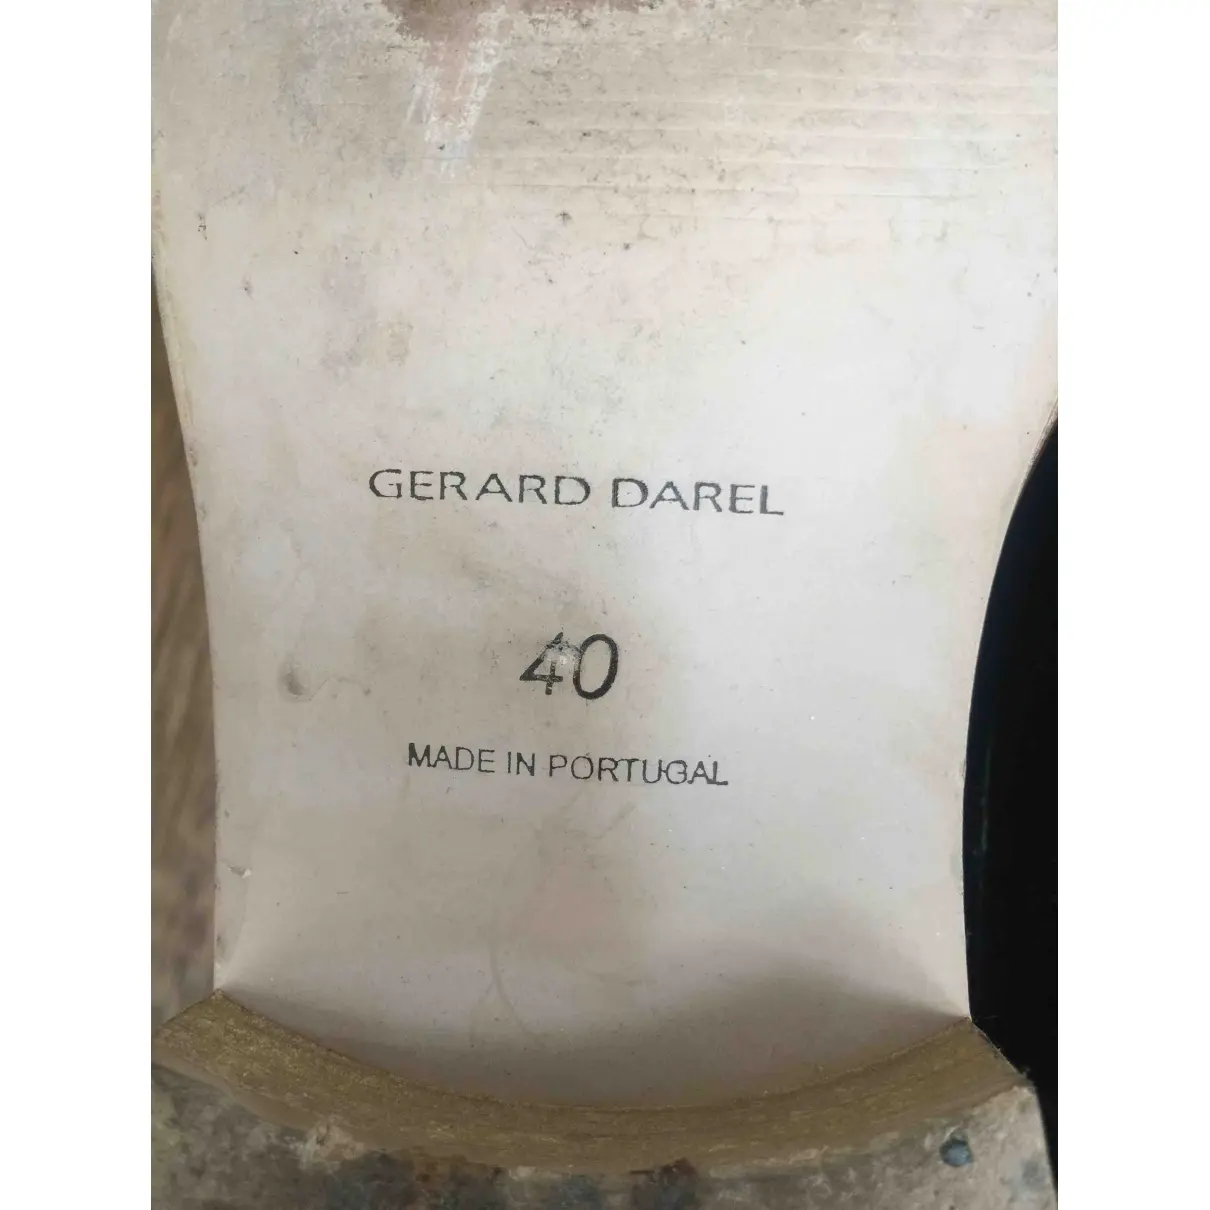 Buy Gerard Darel Leather lace ups online